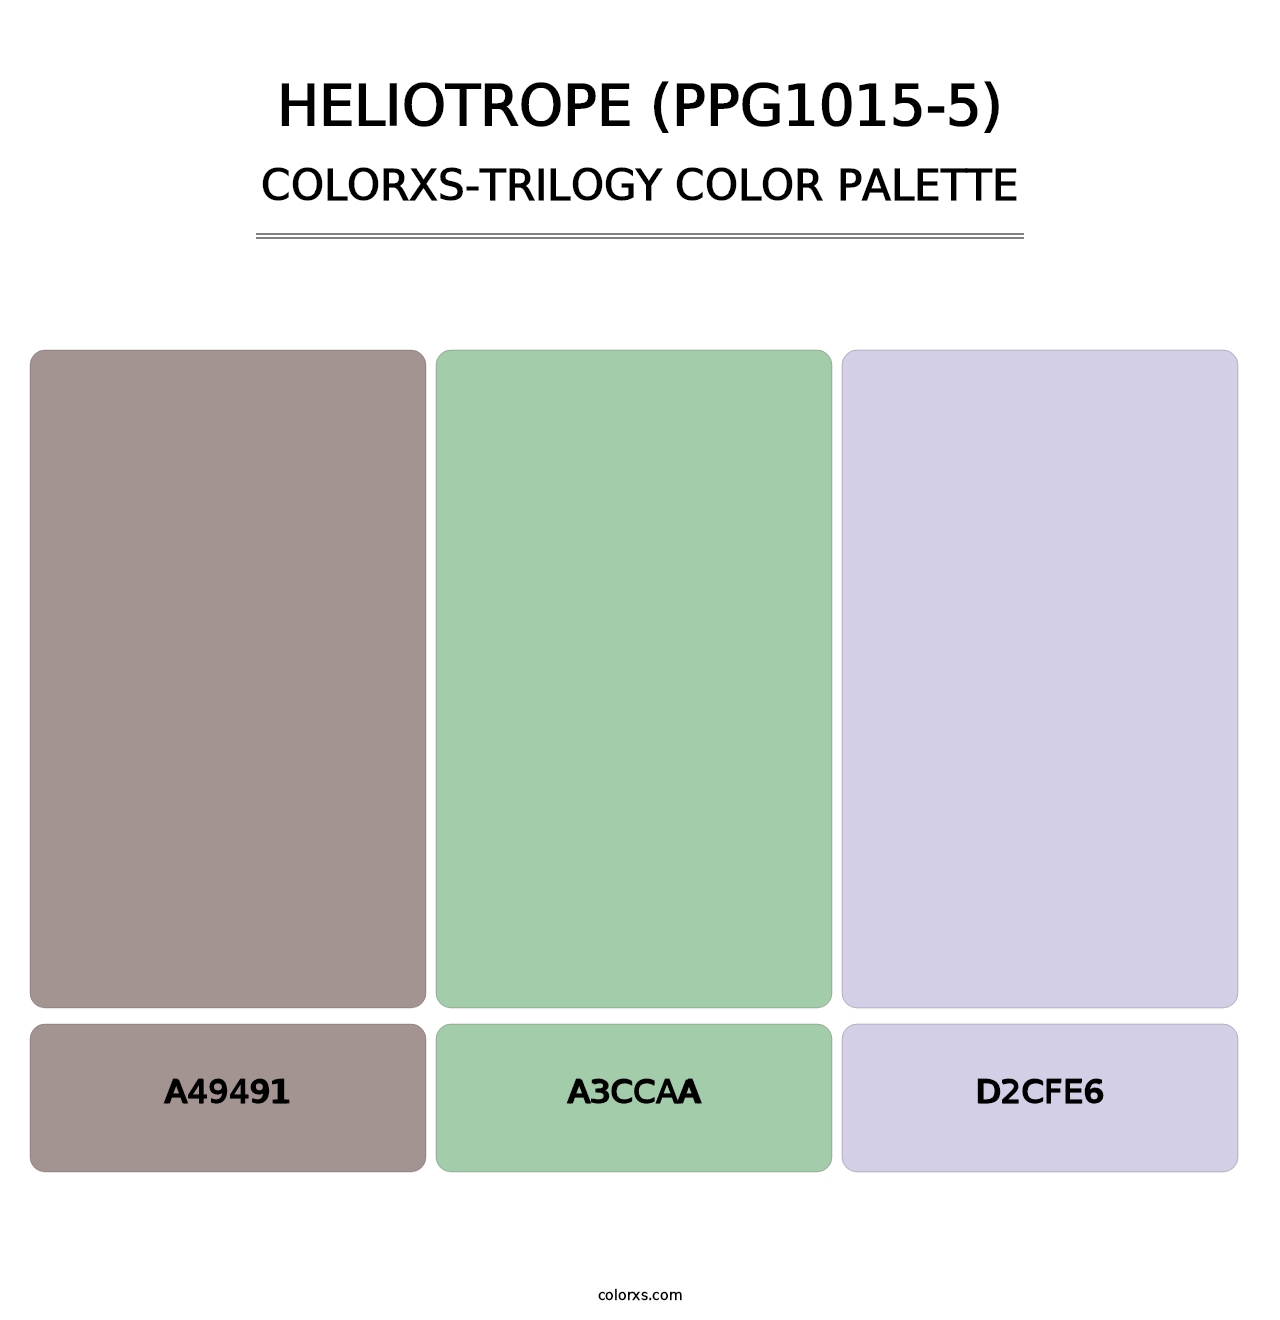 Heliotrope (PPG1015-5) - Colorxs Trilogy Palette